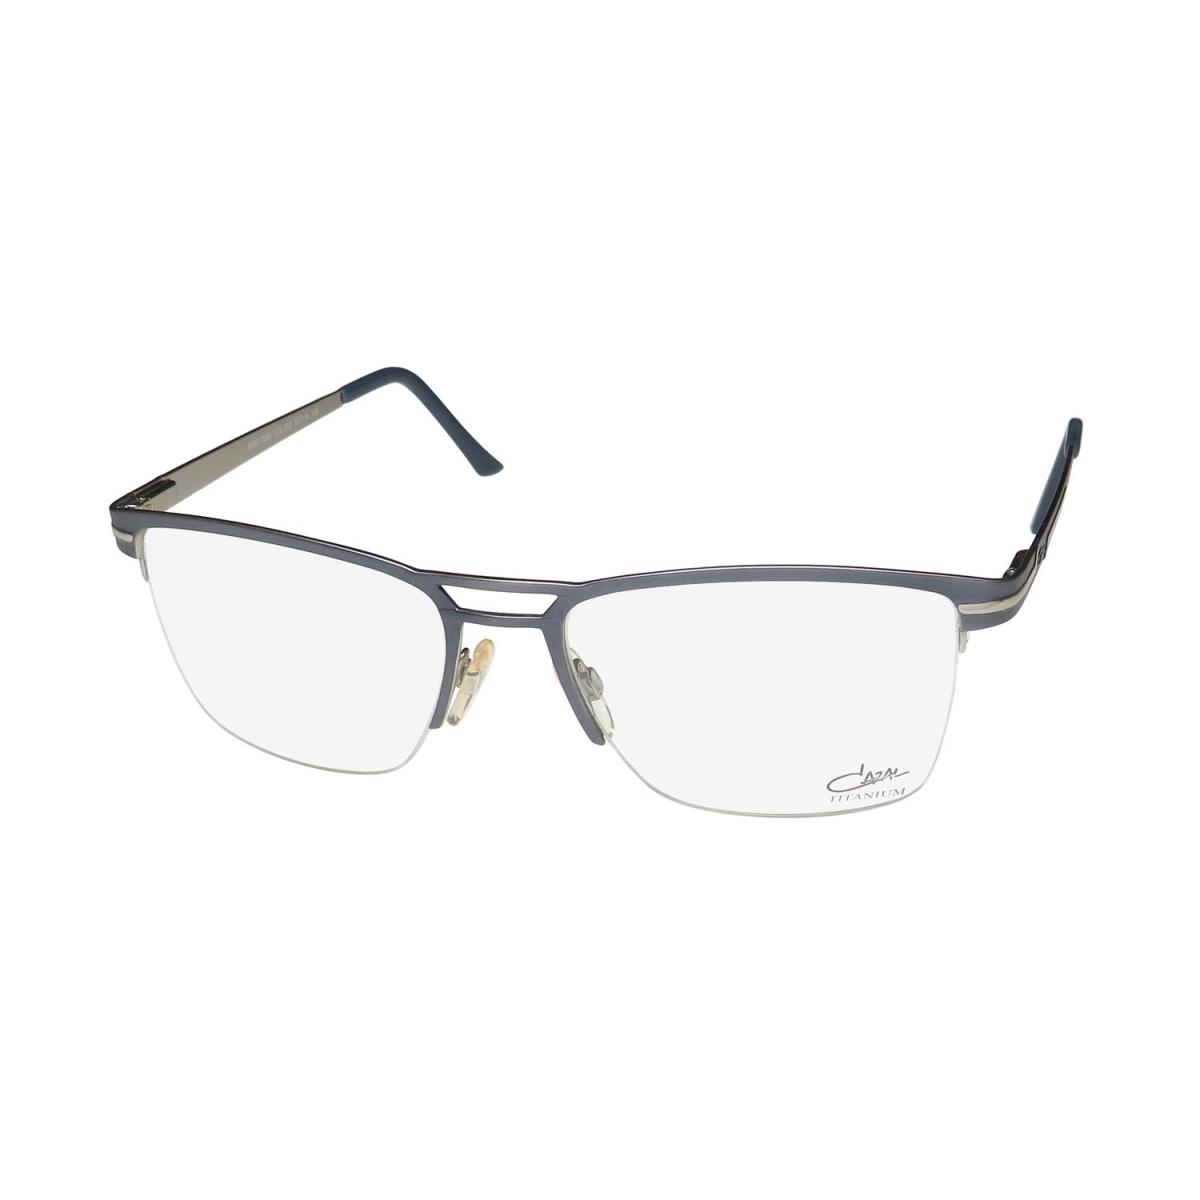 Cazal 7080 Titanium Metal Made IN Germany Contemporary Eyeglass Frame/glasses Blue